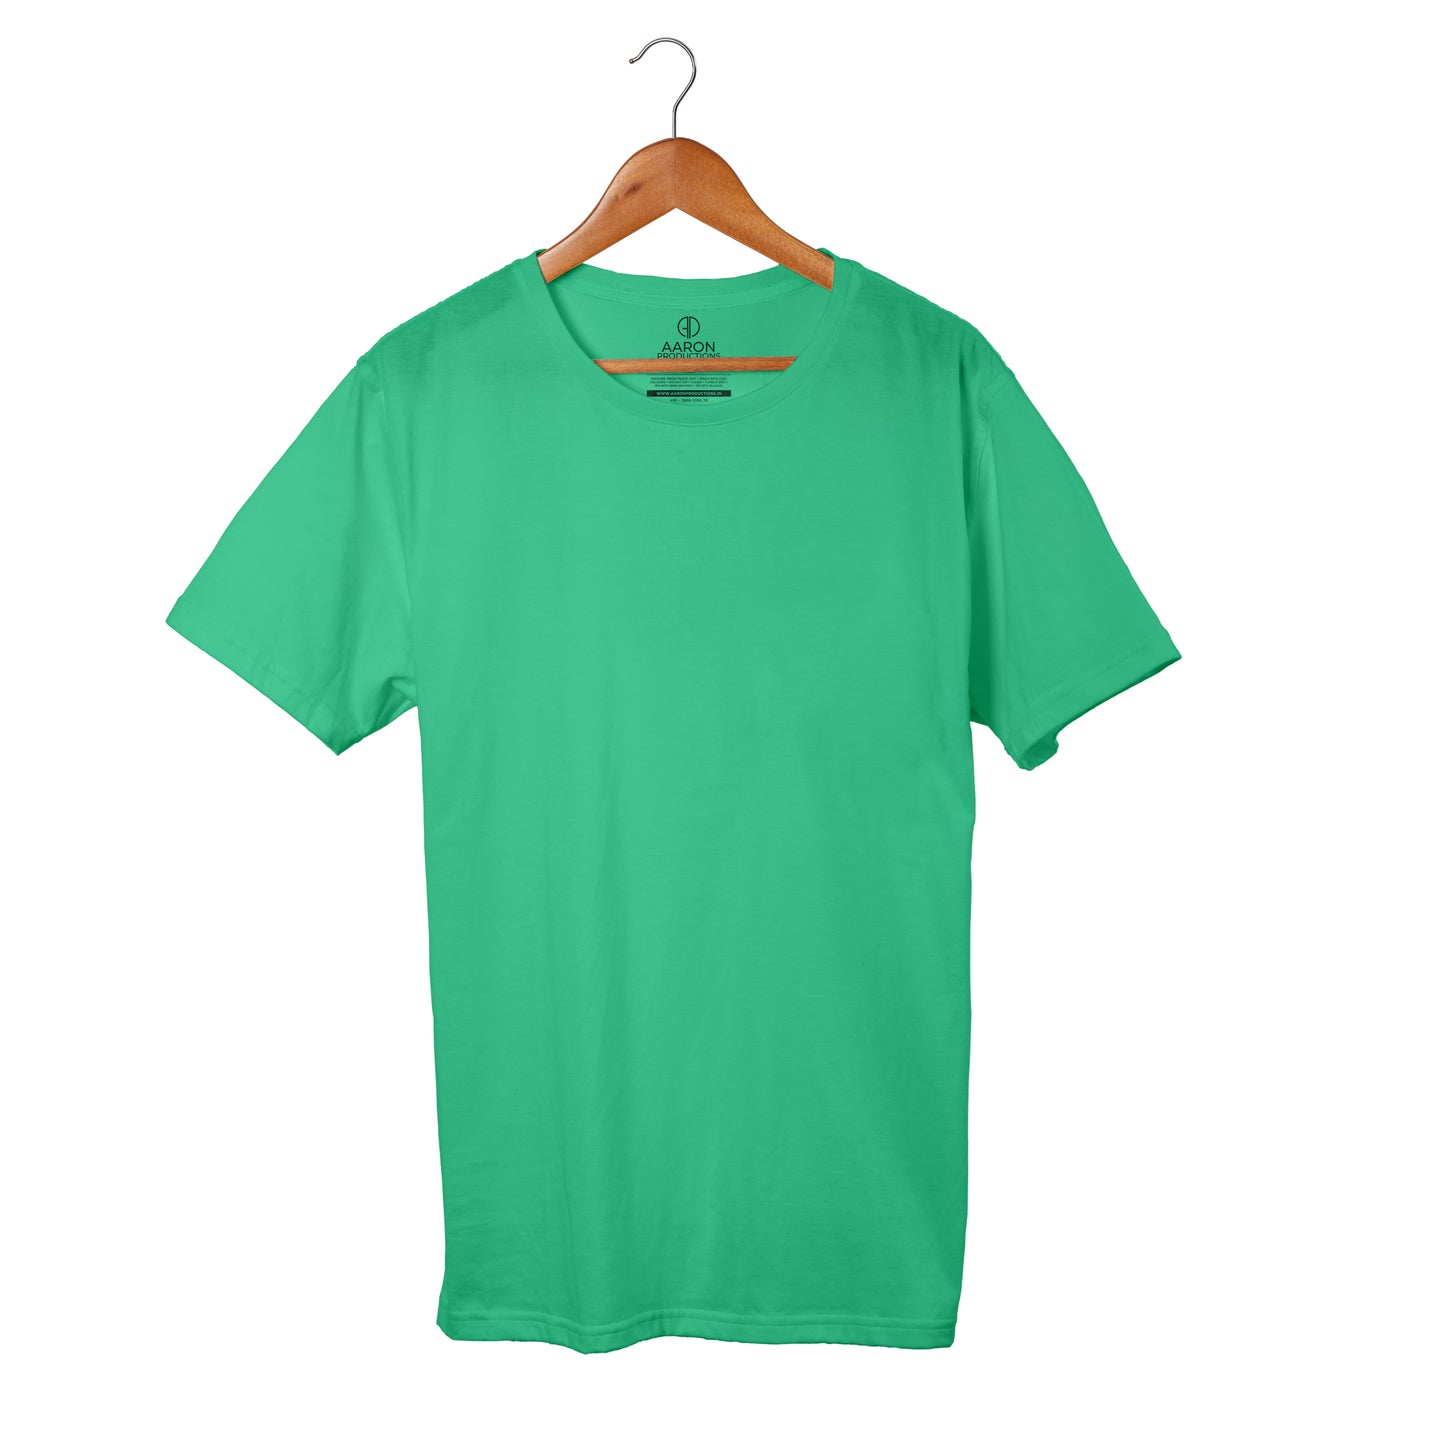 Flag Green - Plain T-shirt Men